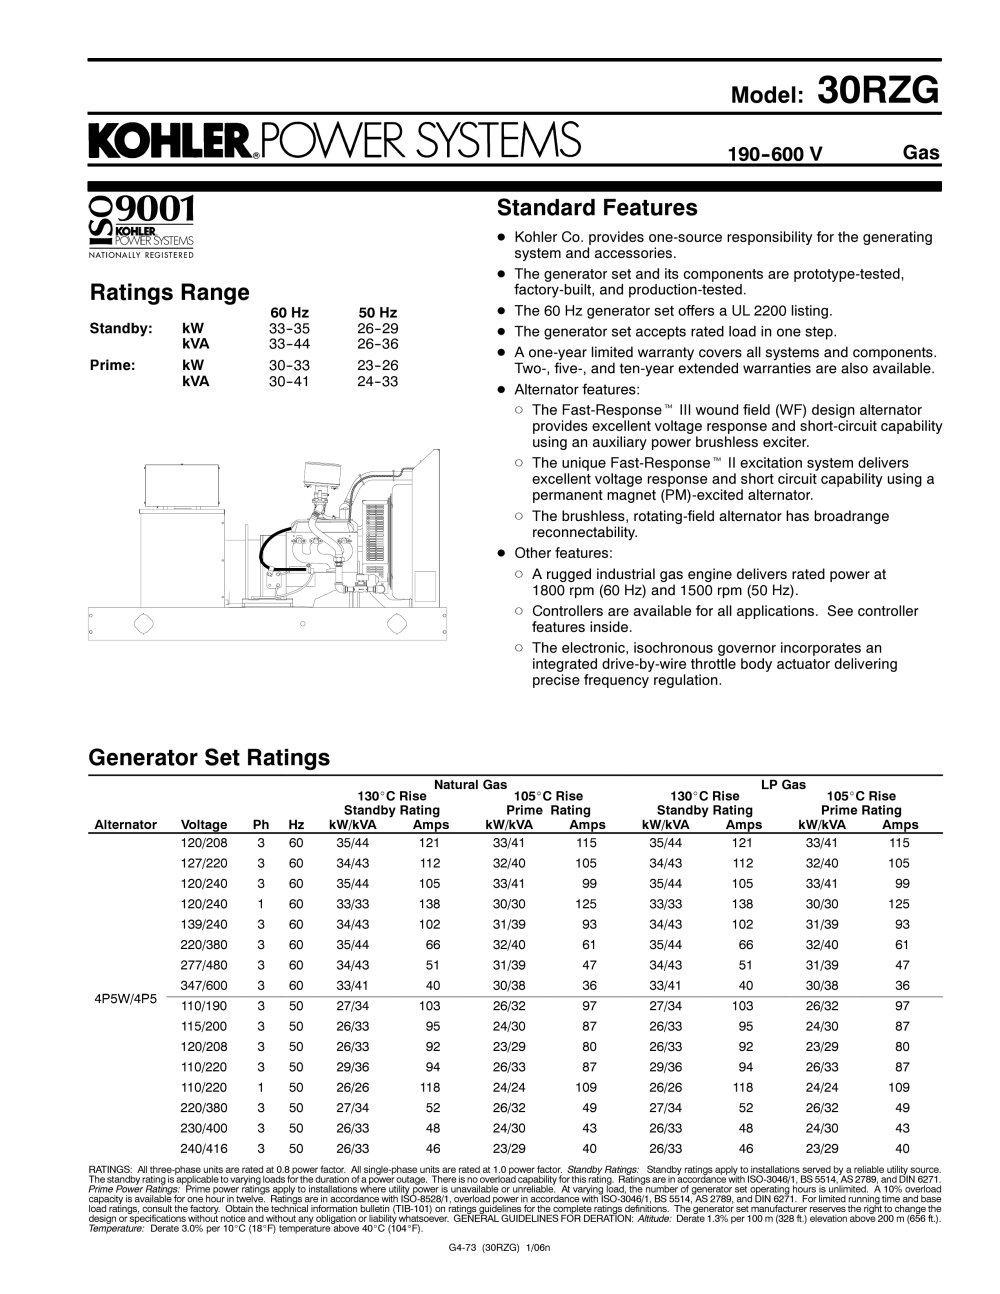 duromax xp4400e wiring diagram